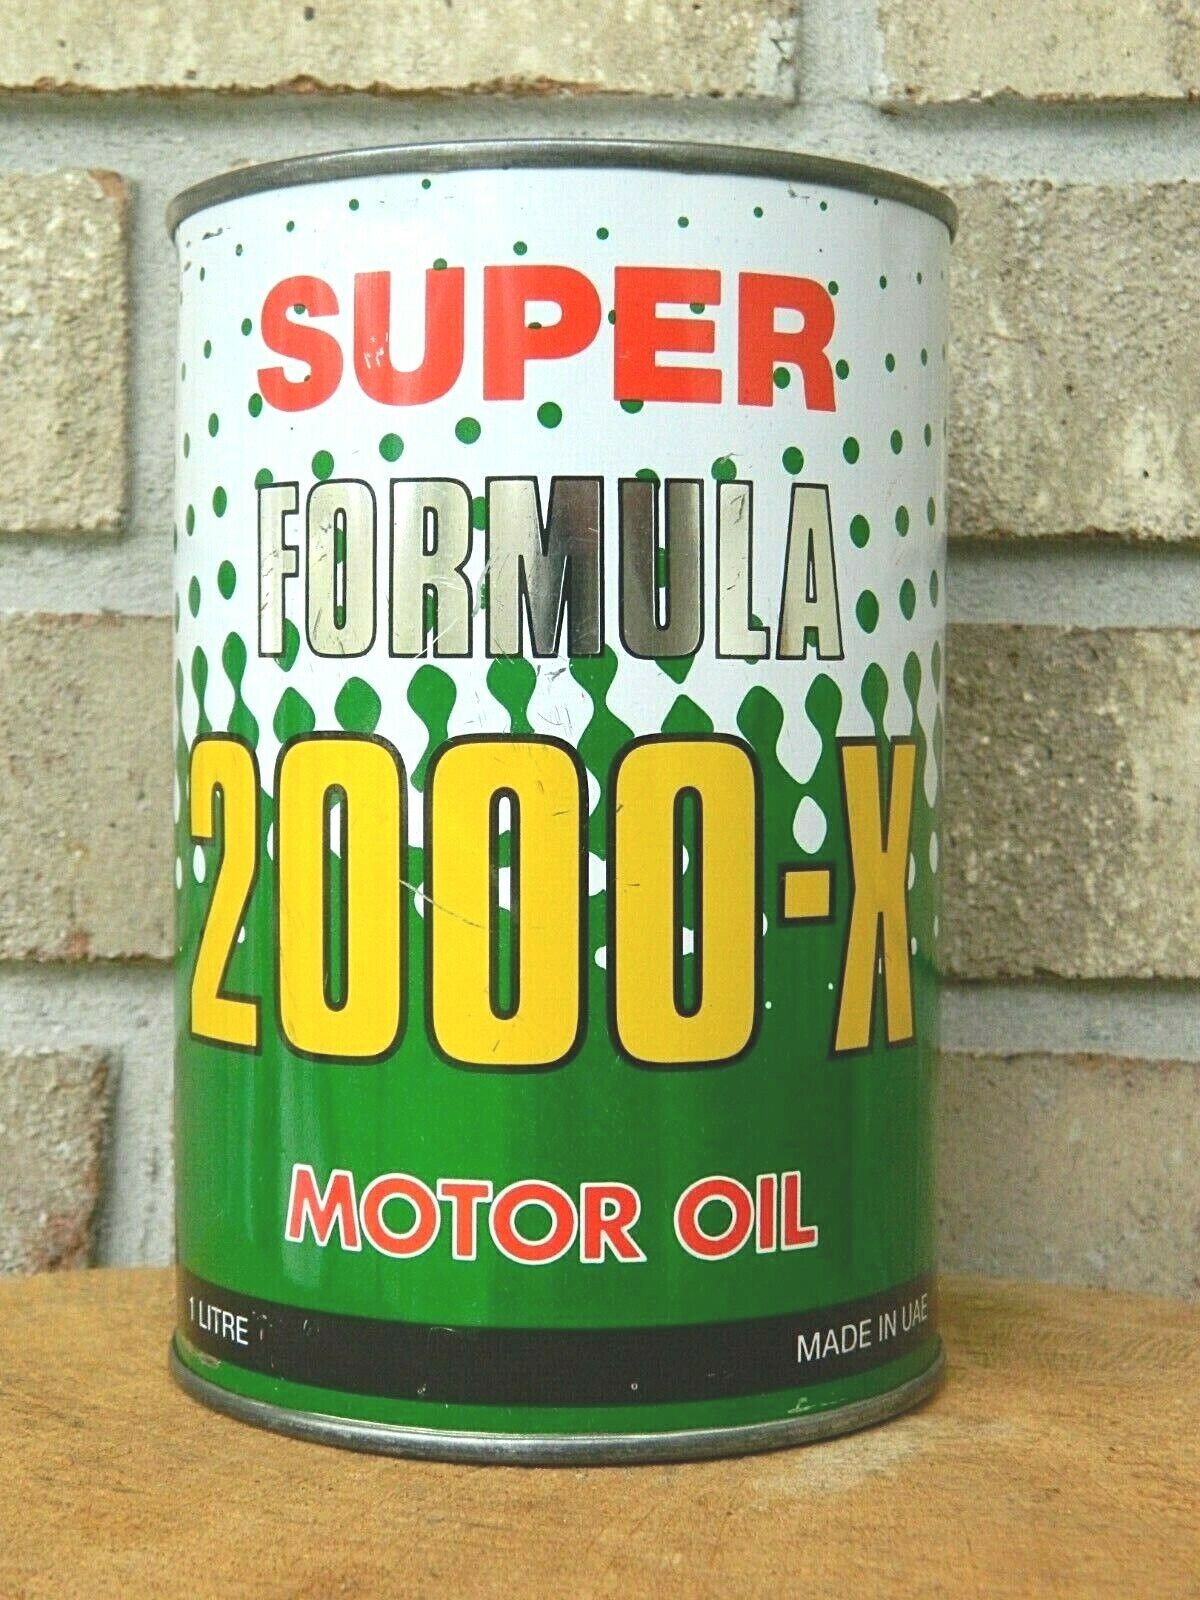 Scarce United Arab Emirates (UAE) Super Formula 2000-X Motor Oil Liter Can  